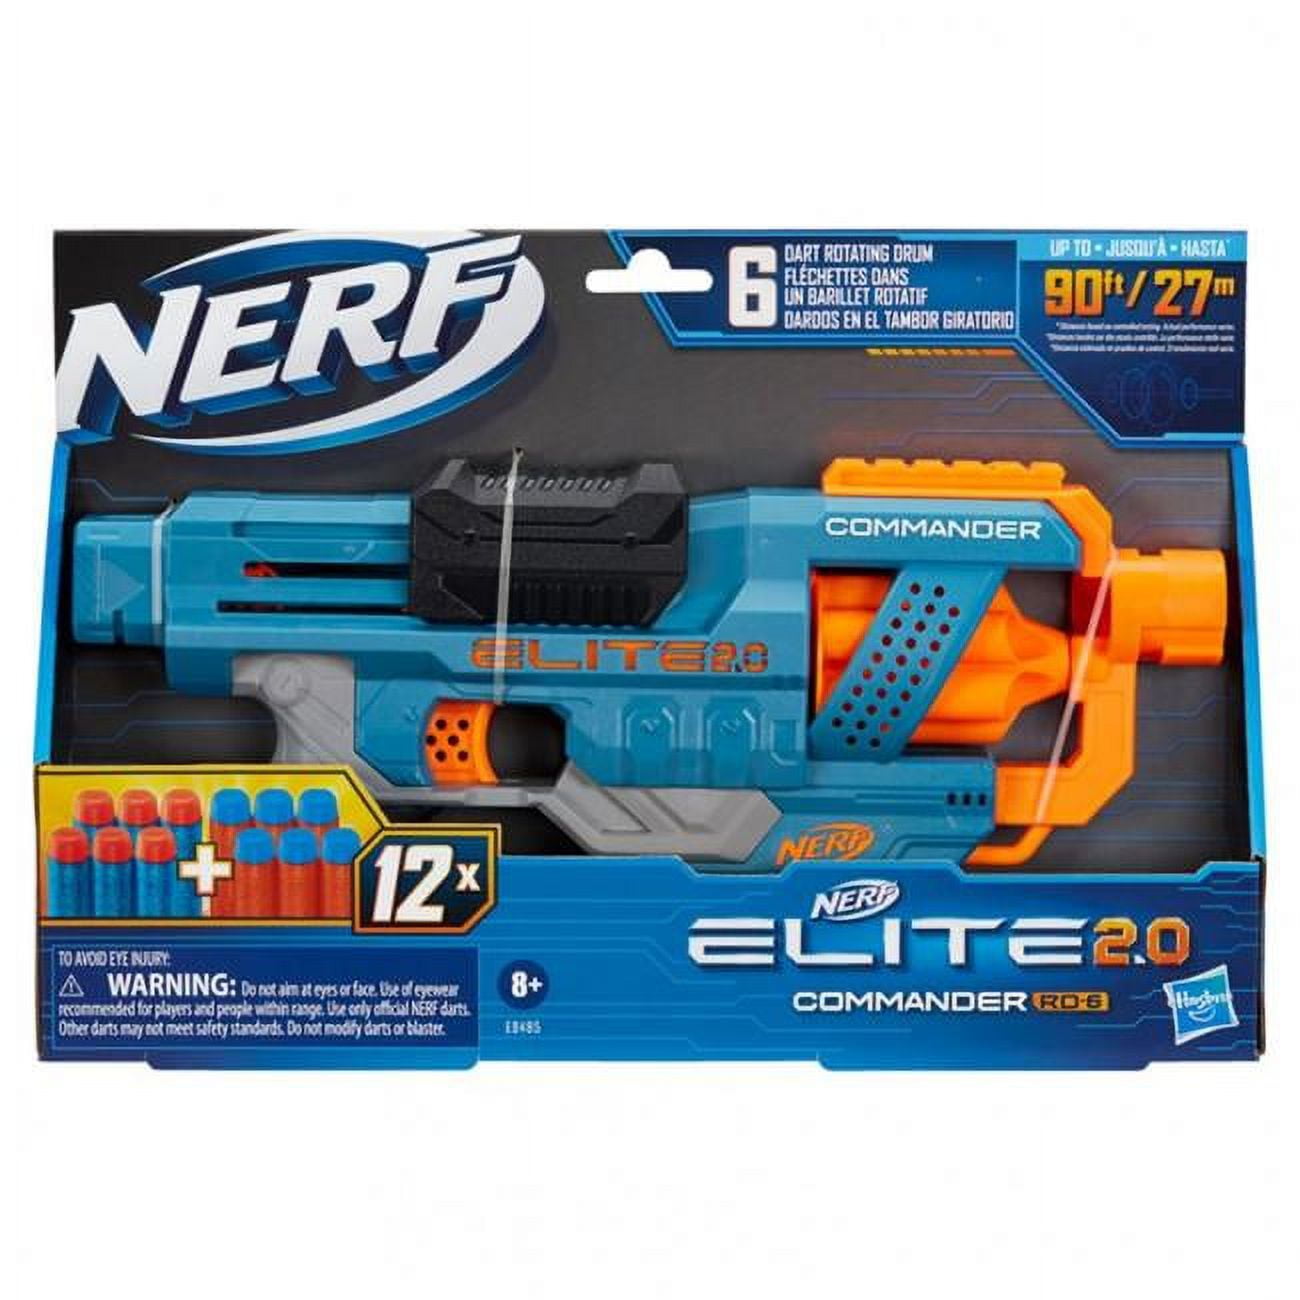 Nerf Elite 2.0 Commander RD-6 Blaster, 12 Official Nerf Darts, 6